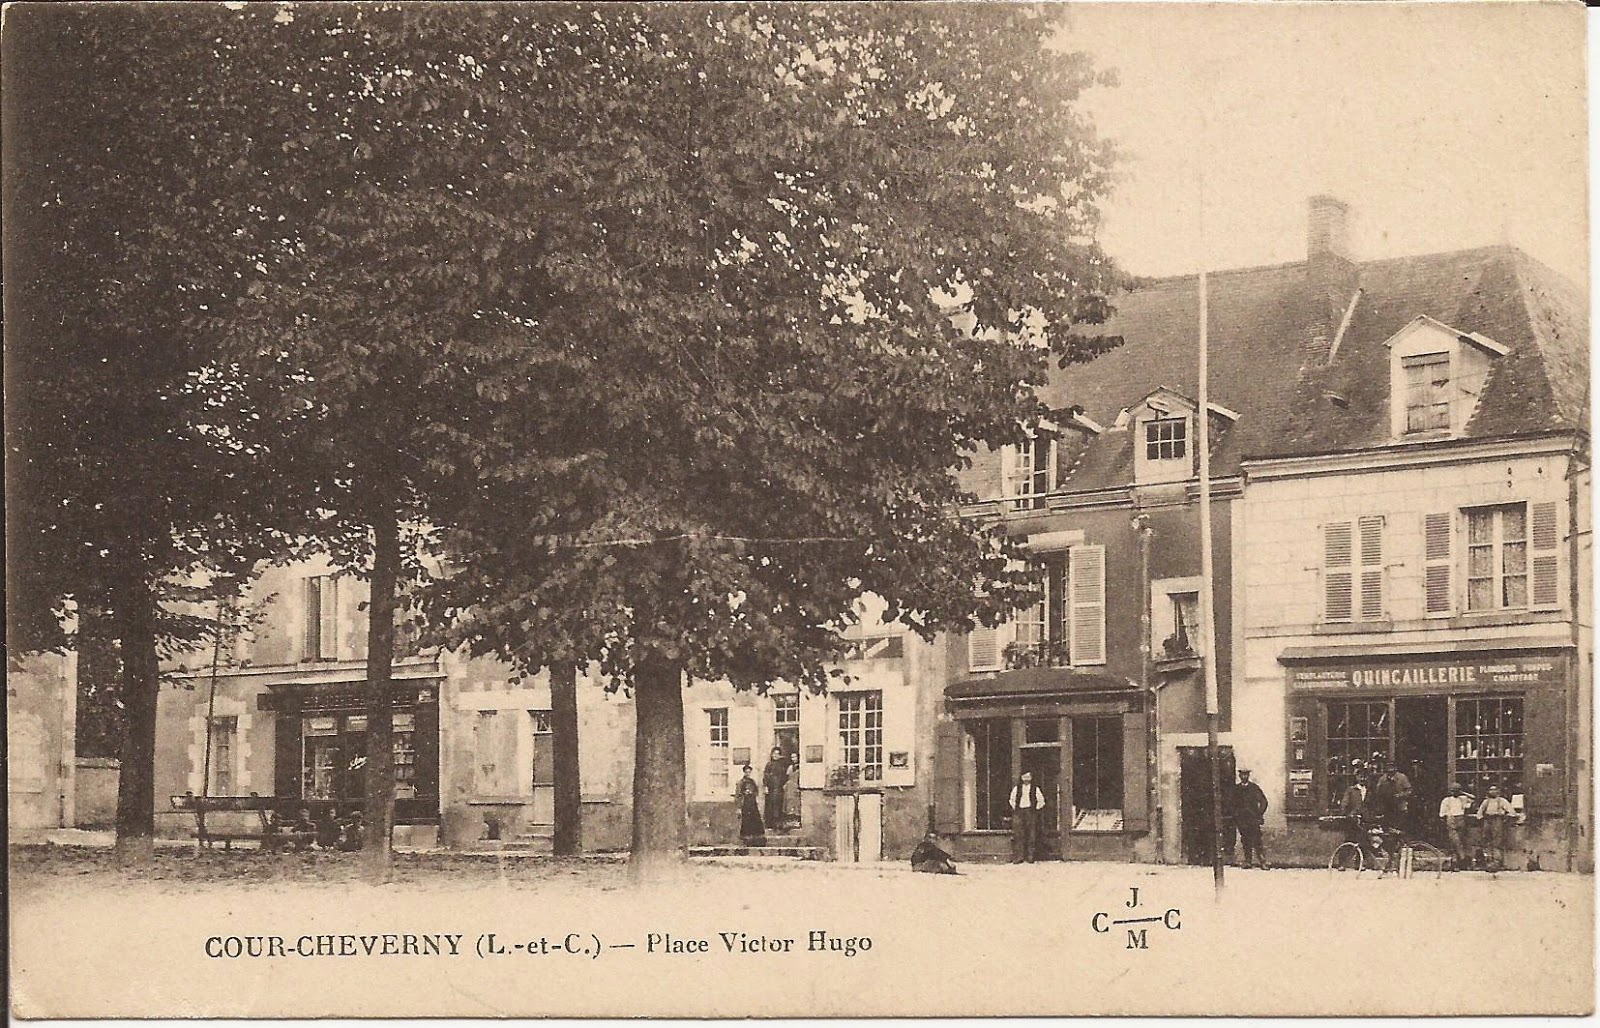 Cour-Cheverny - Église & abords